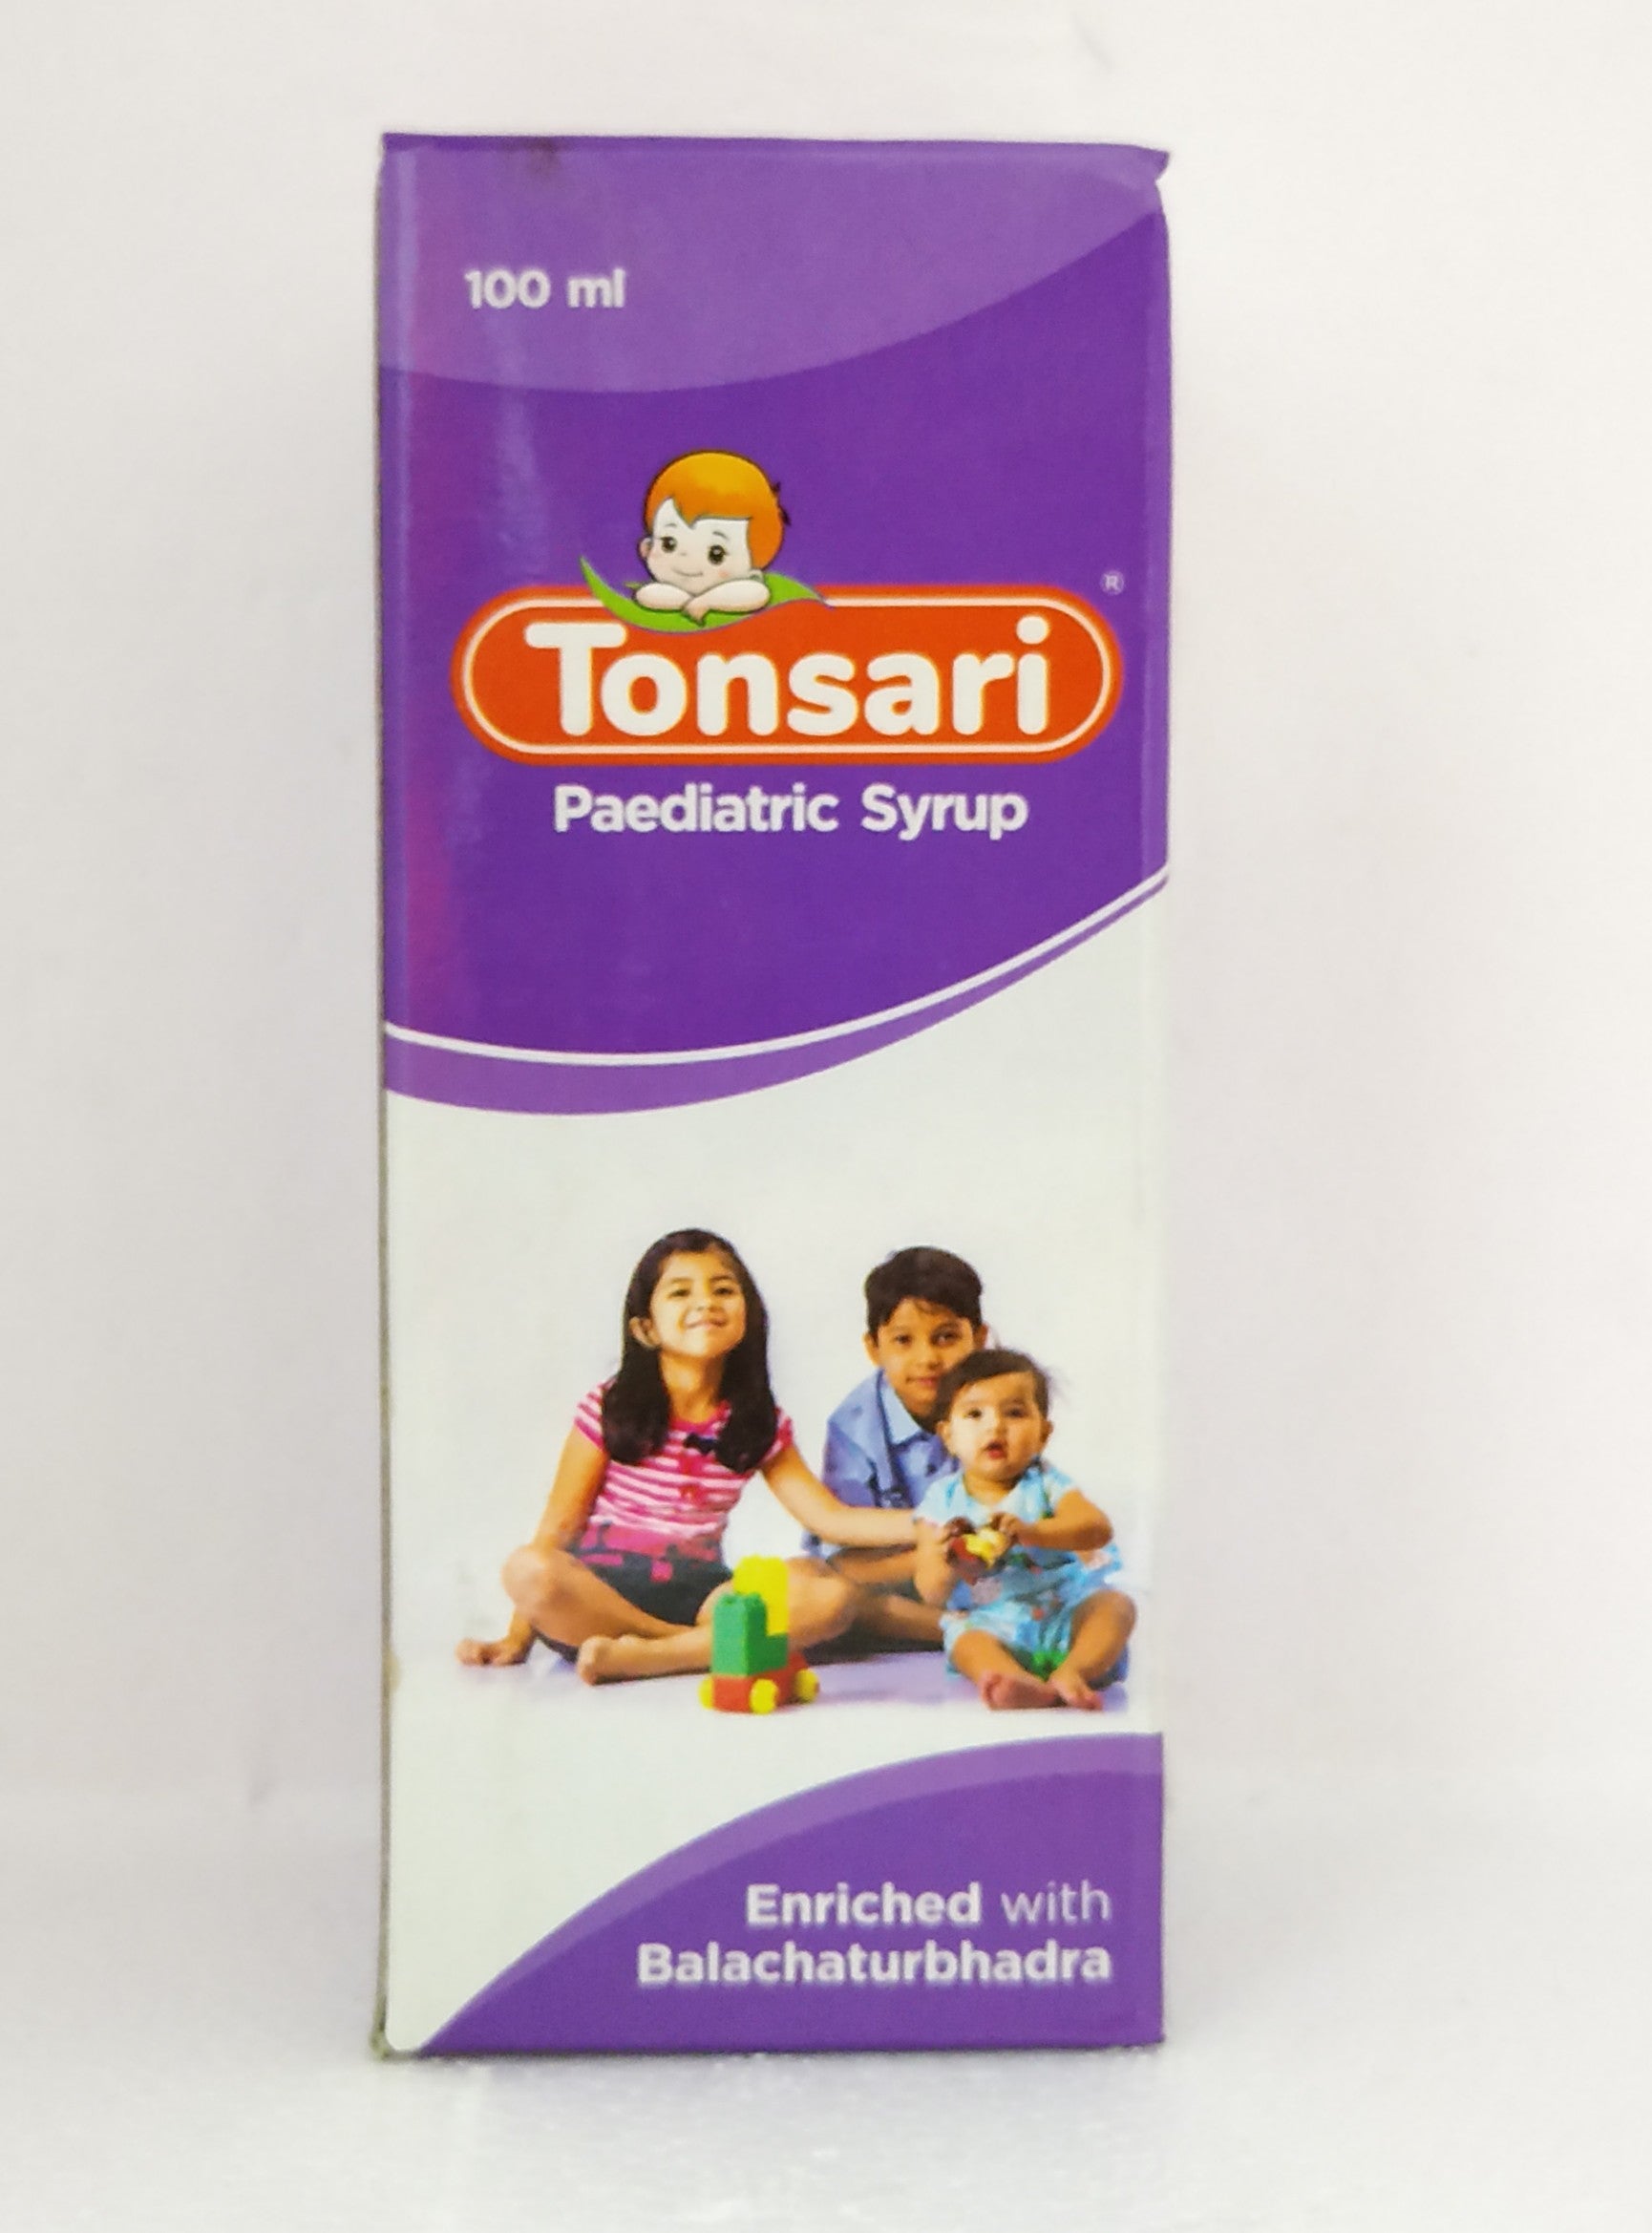 Shop Tonsari Paediatric Syrup 100ml at price 95.00 from Sagar Online - Ayush Care